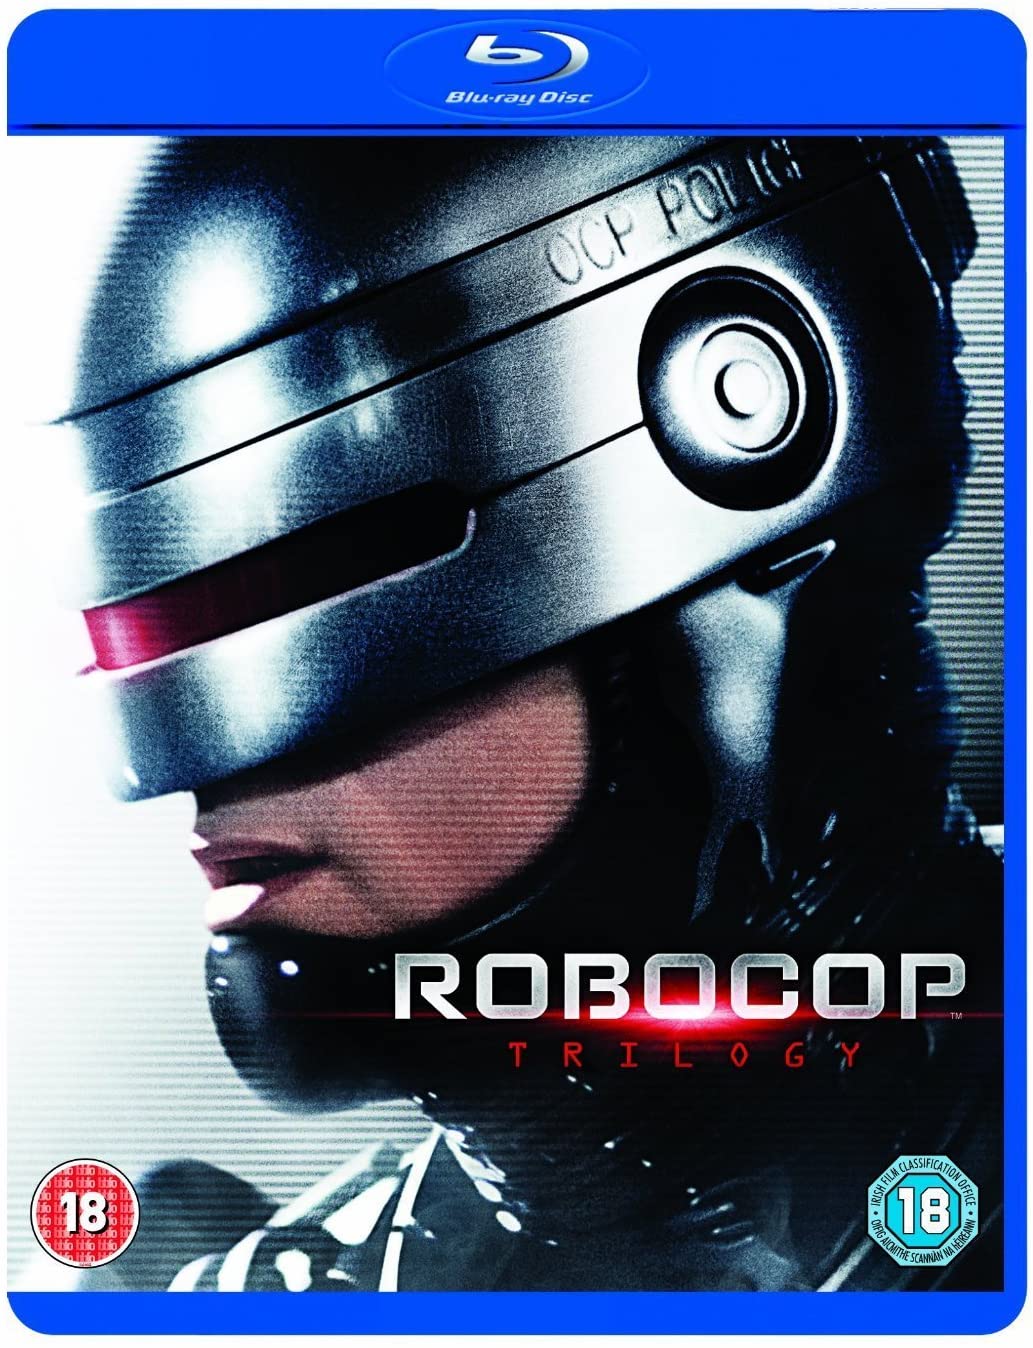 Robocop Trilogy [Remastered] [Blu-ray] [Region Free]